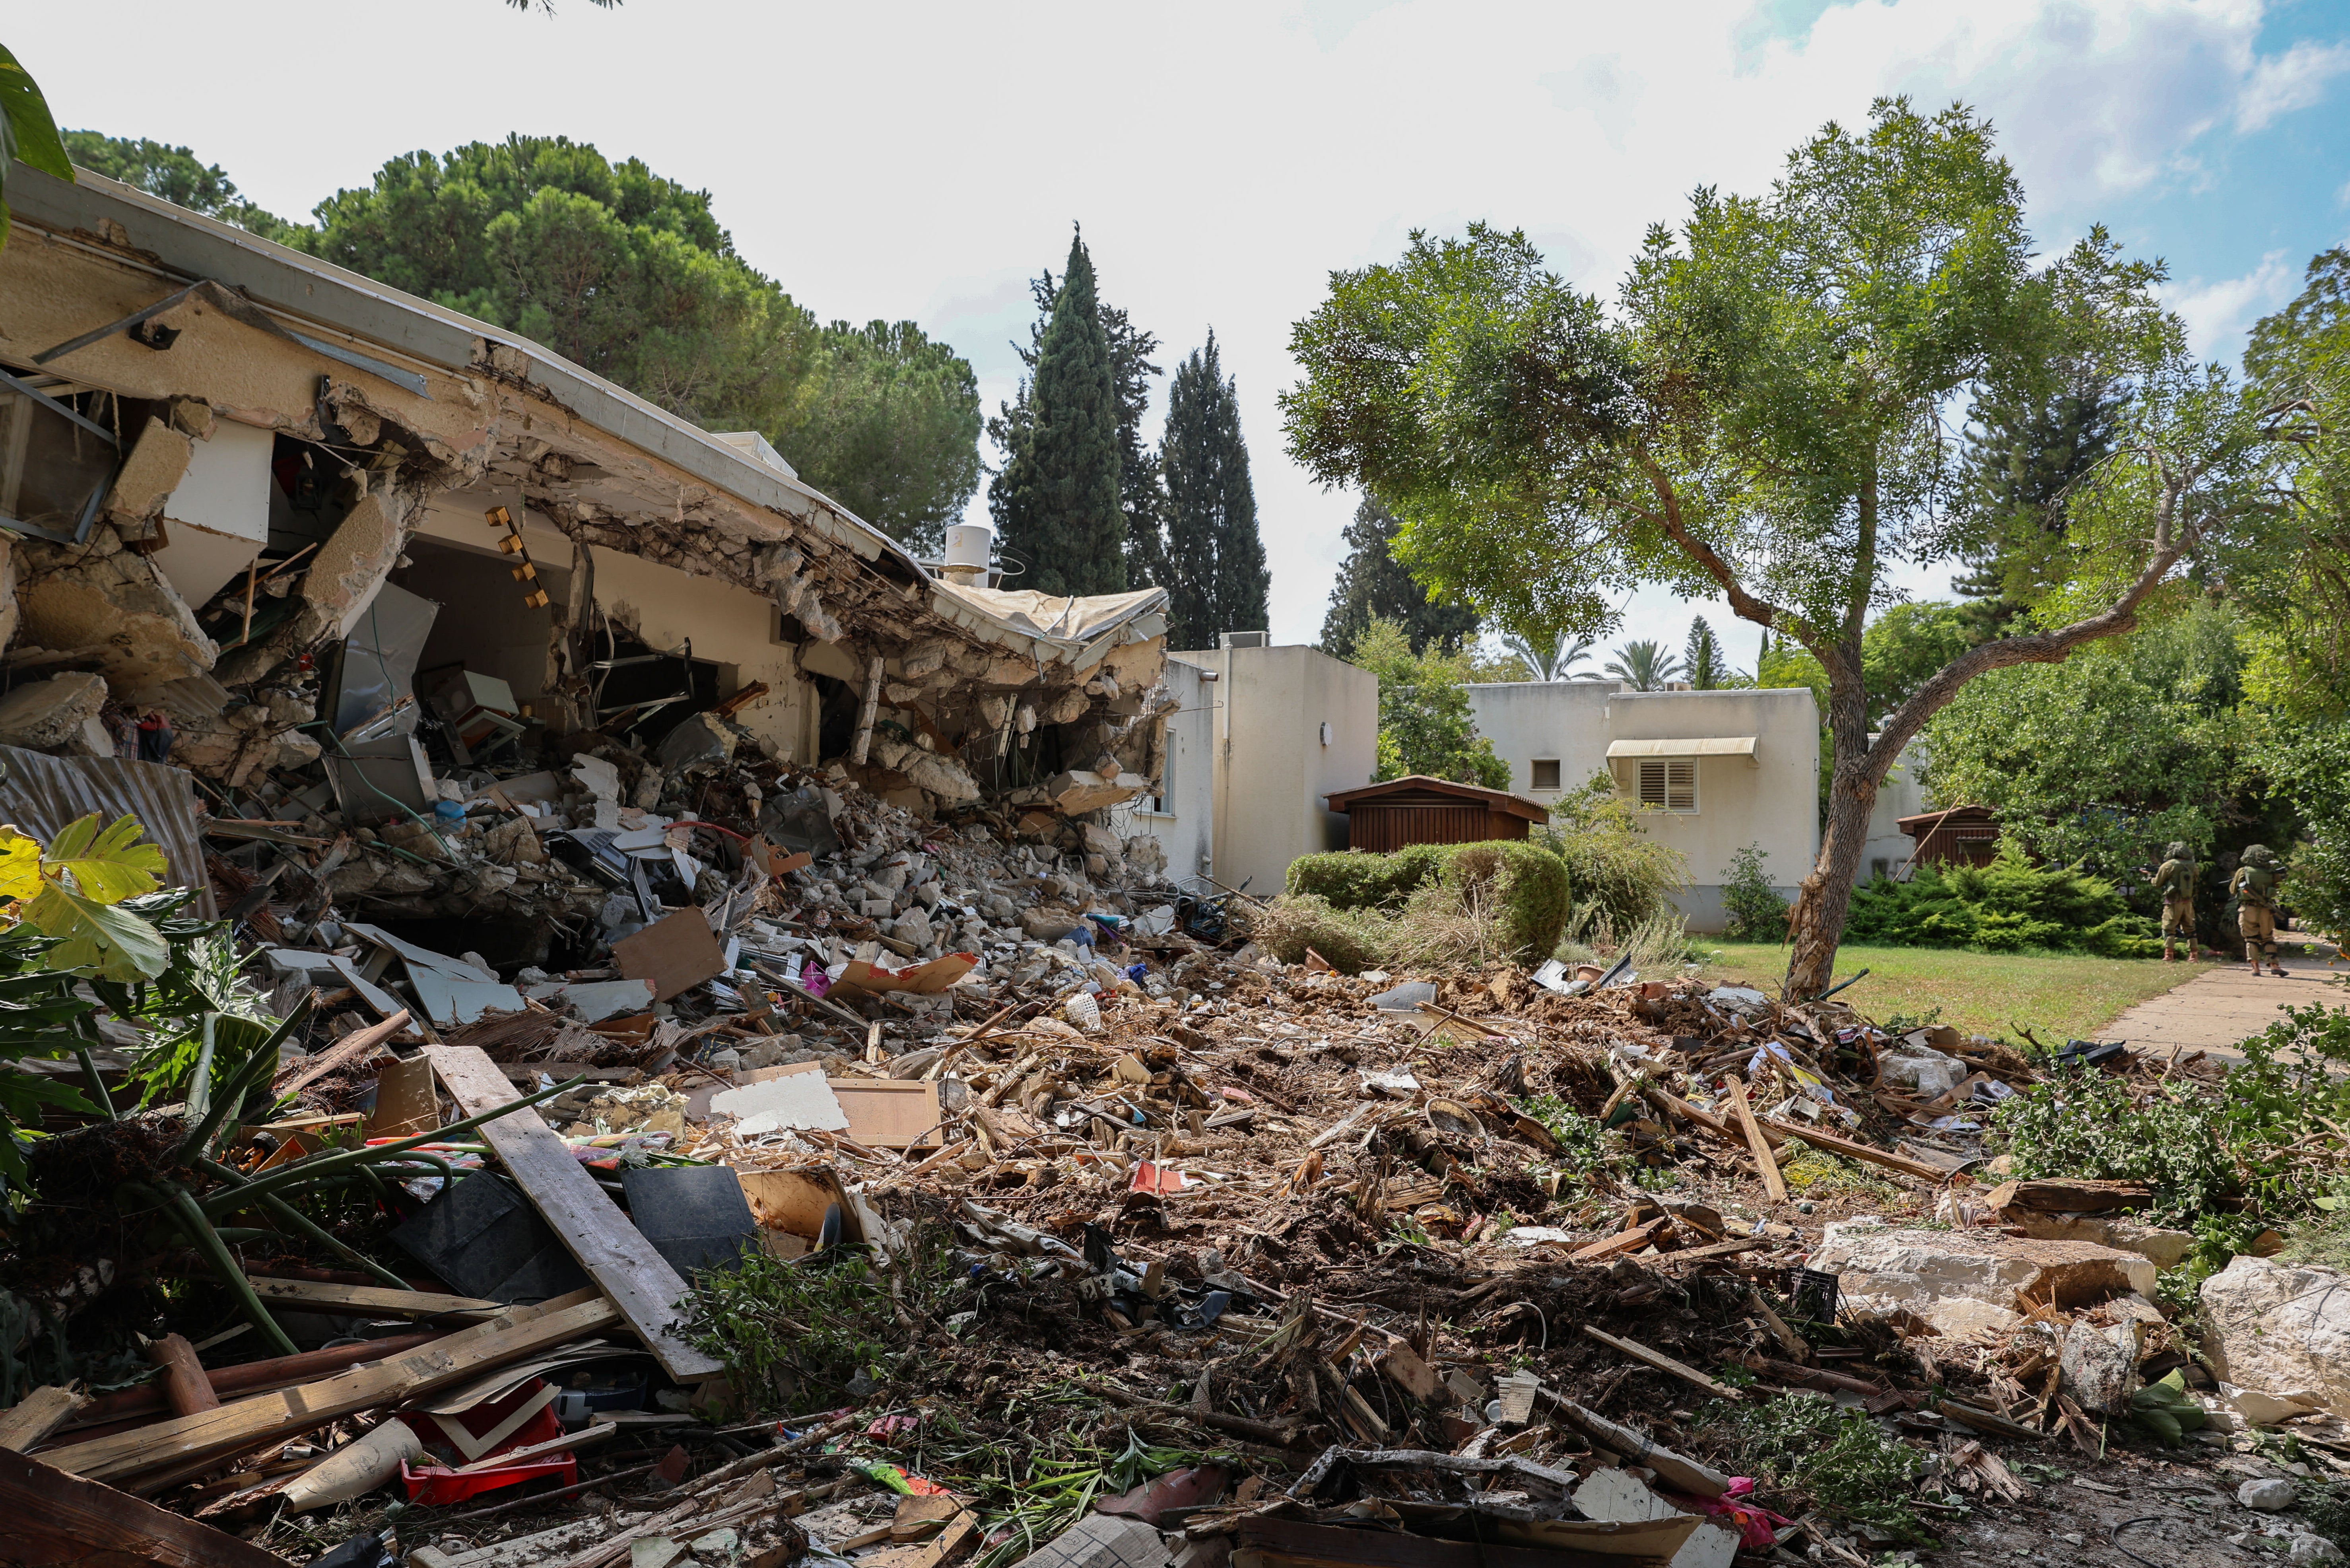 The destruction in Kfar Aza